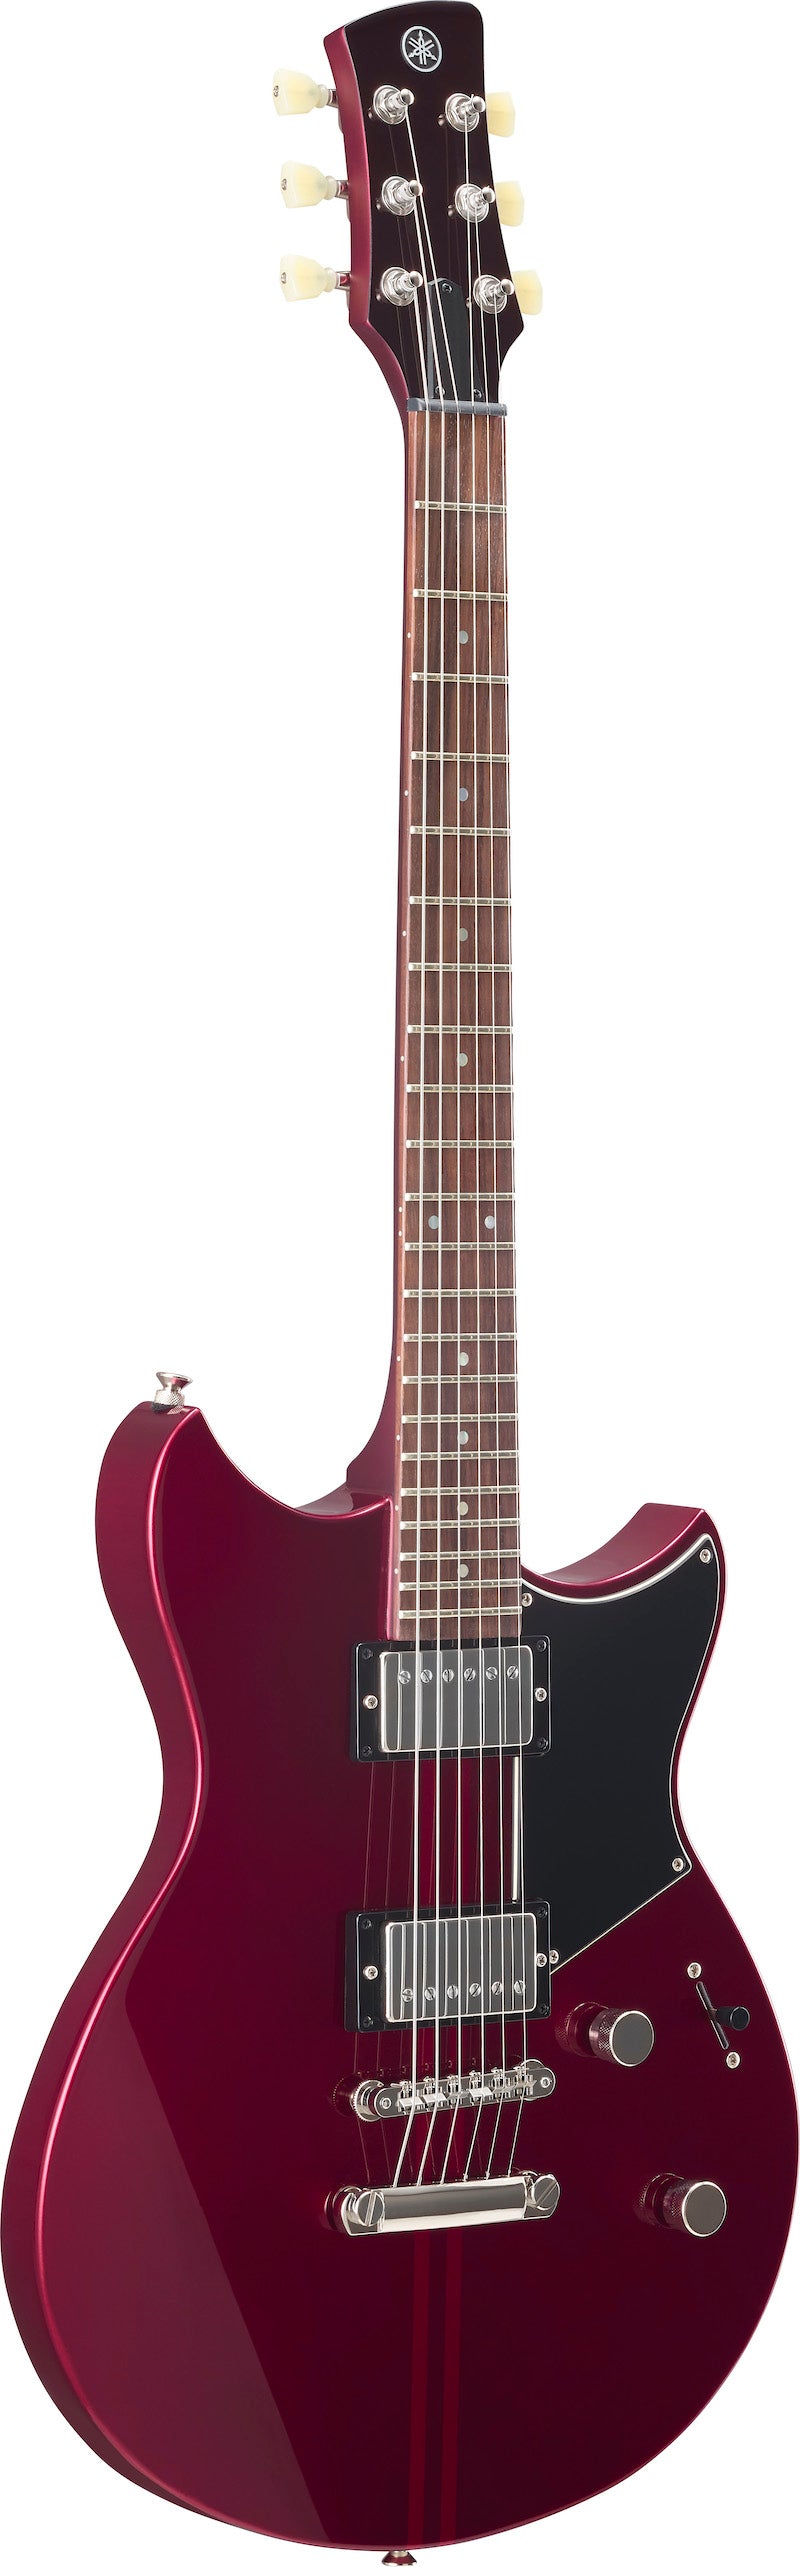 Yamaha's New Revstar - A Pratte Guitars & Strings